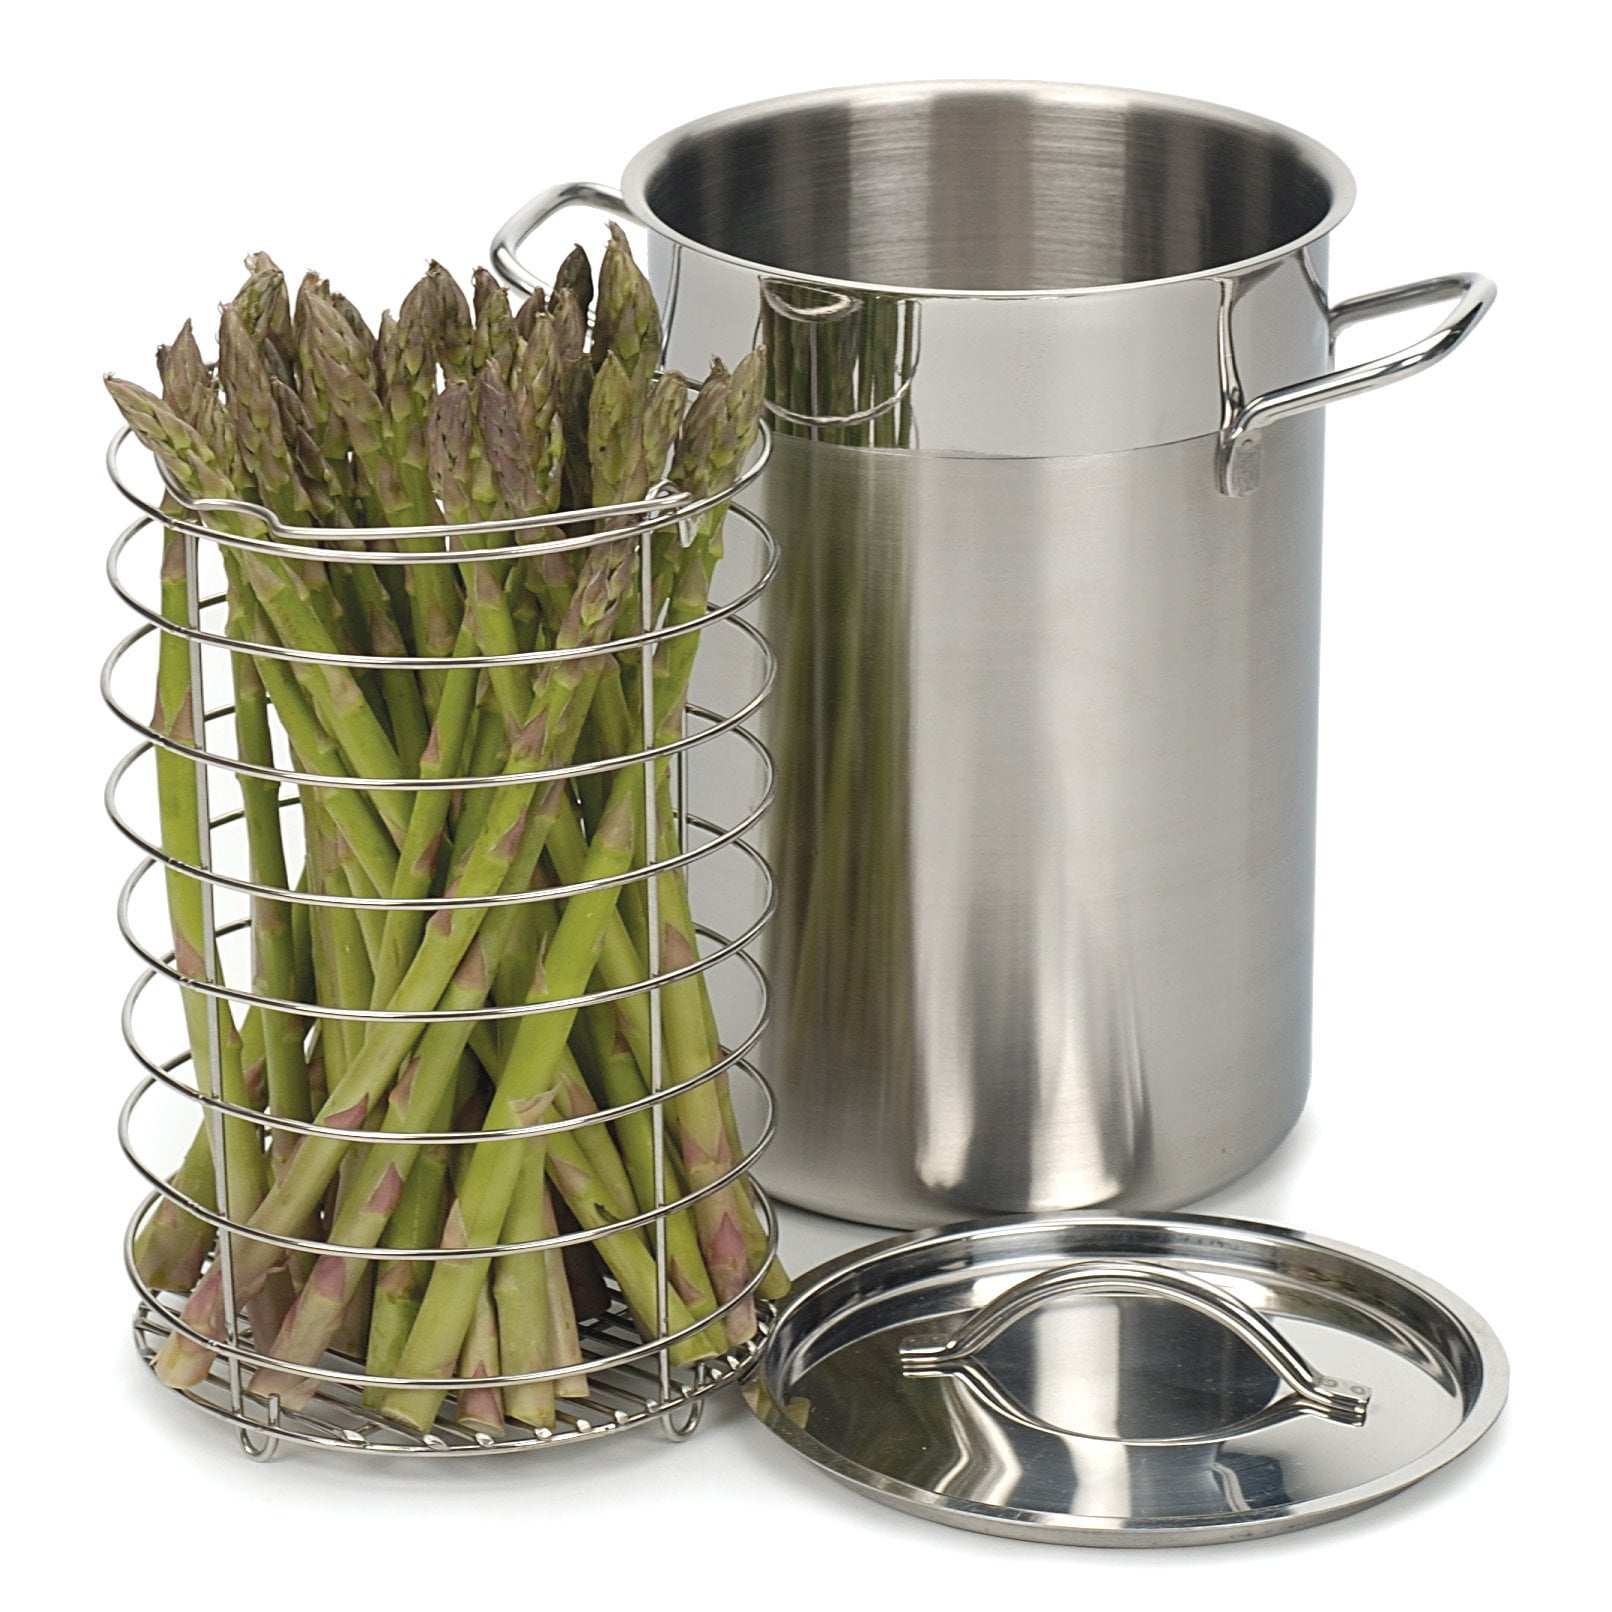 Asparagus Cooking Pot Asparagus Pot Stainless Steel 4,5L Pot Insert Basket Induction